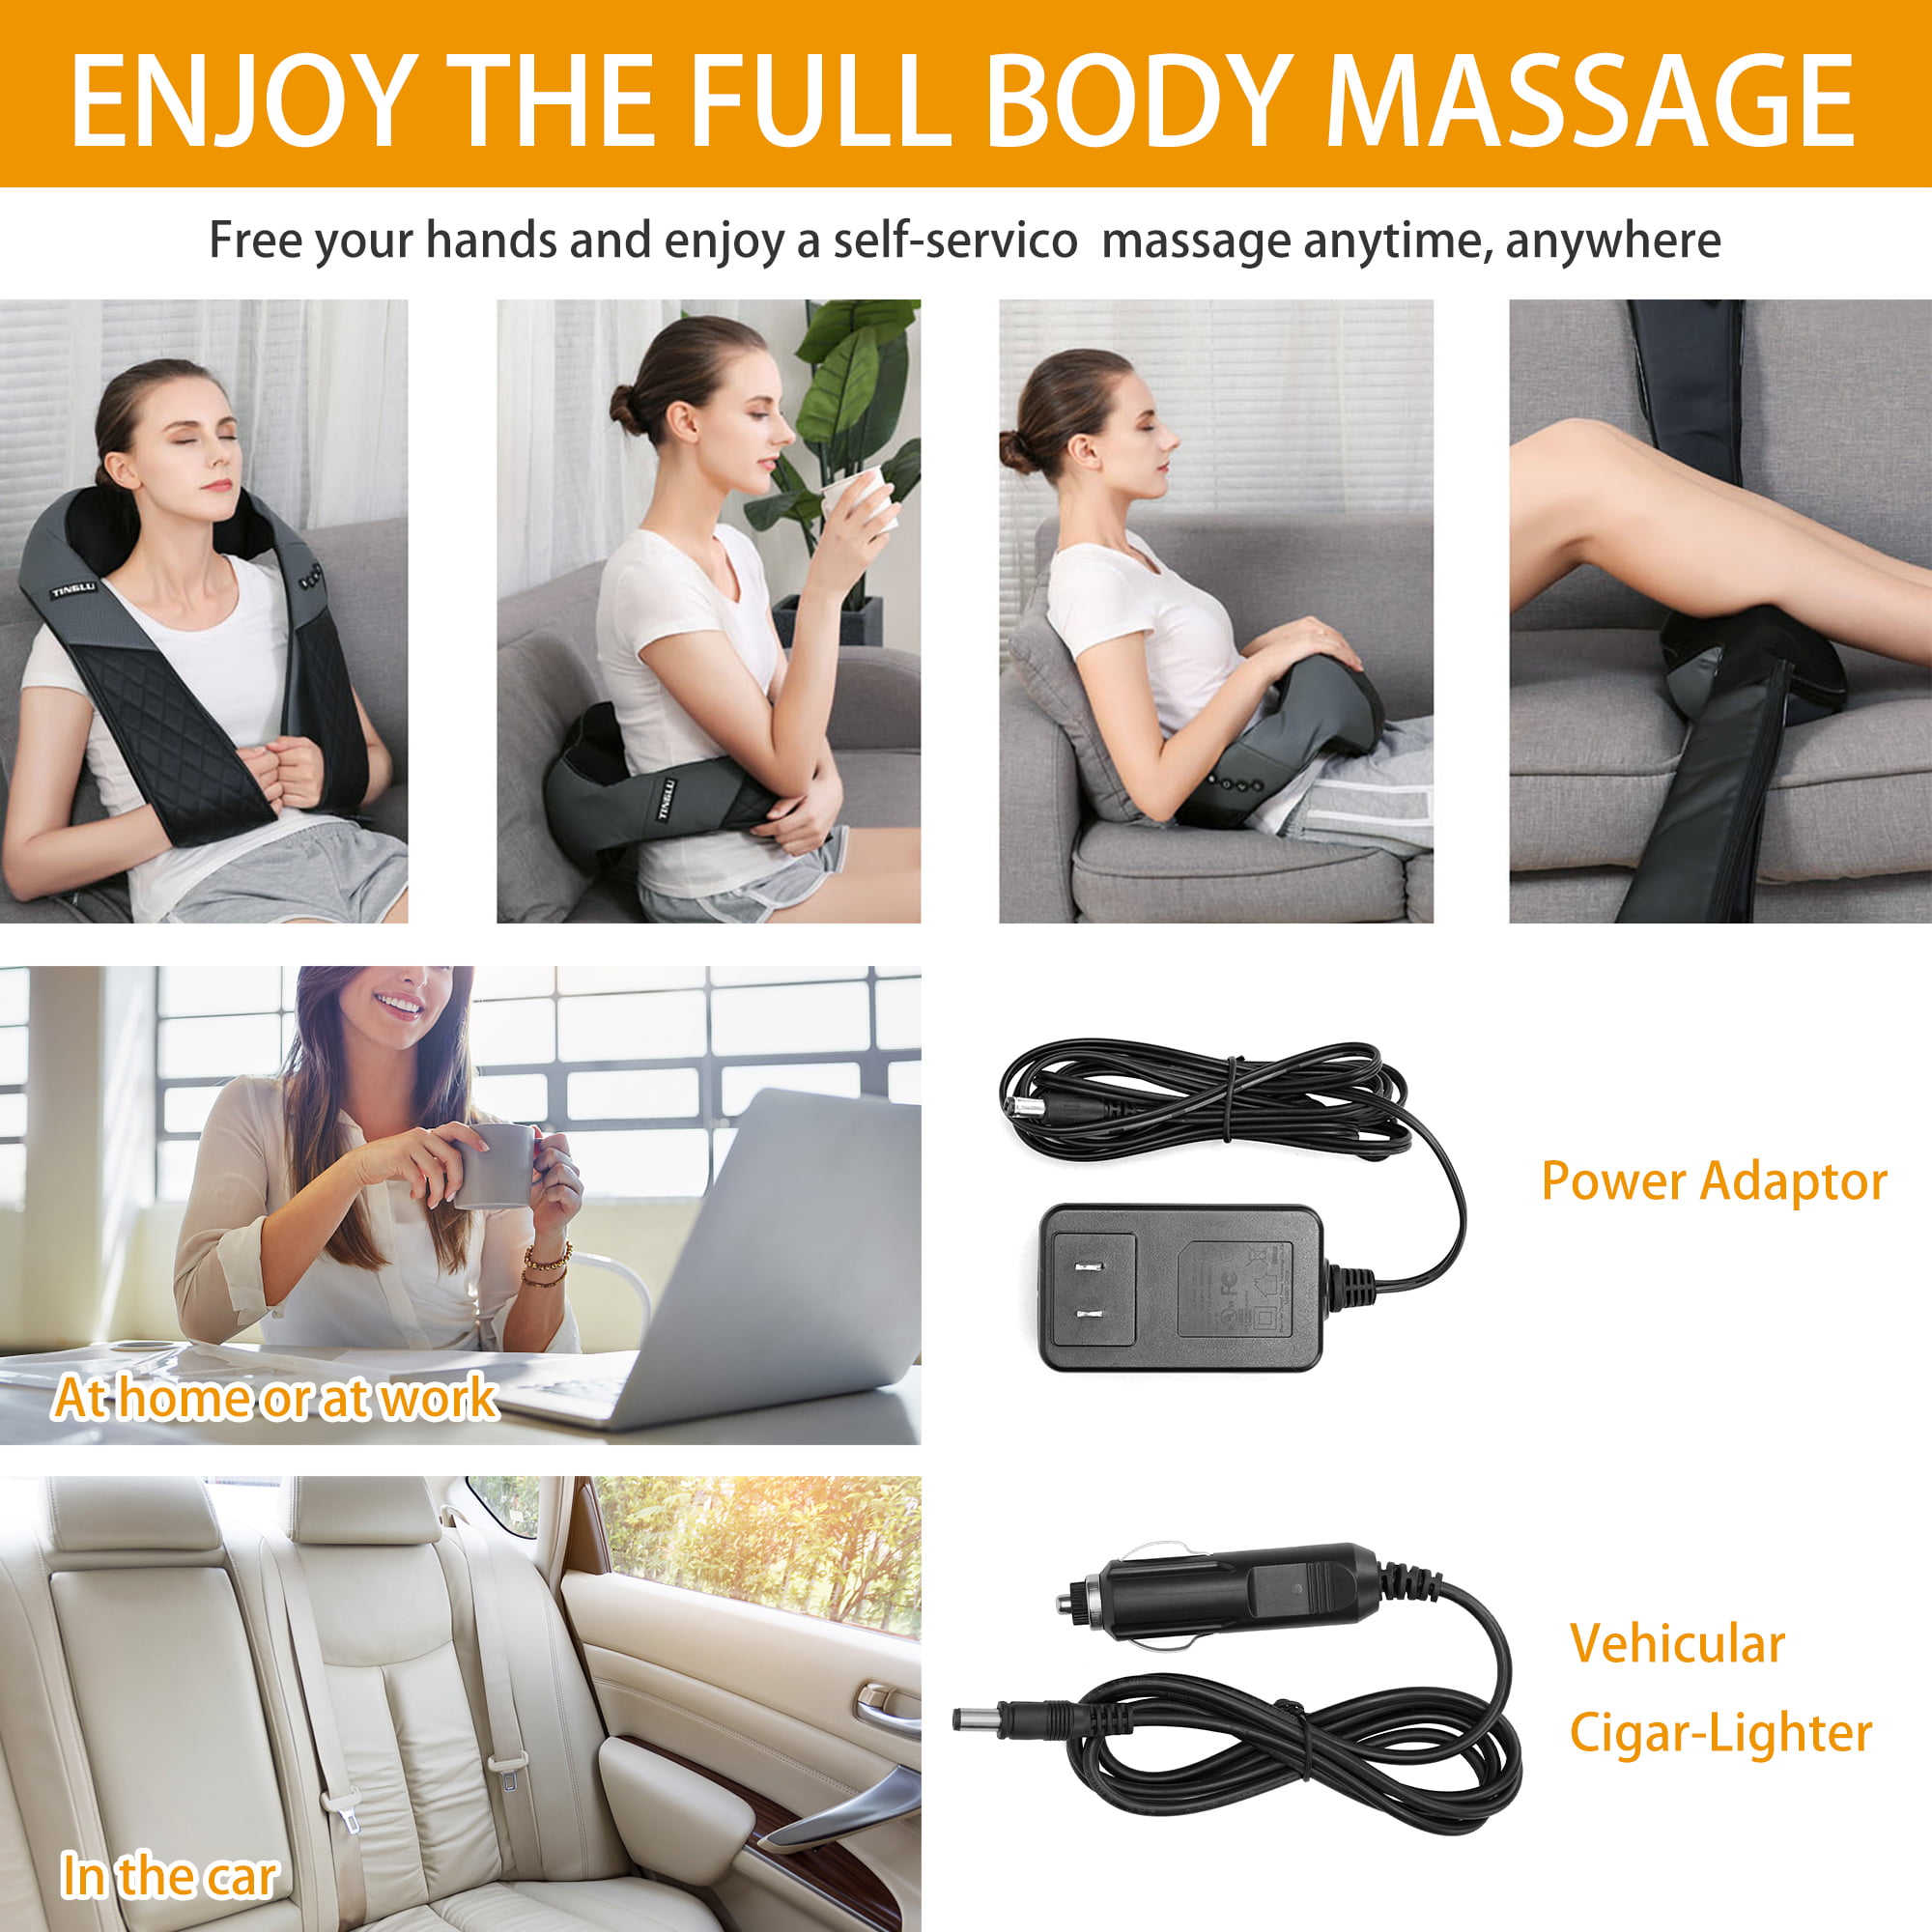 Shiatsu Neck and Shoulder Massager, Back Massager with Heat, Deep Kneading  Electric Massage Pillow for Neck, Shoulder 